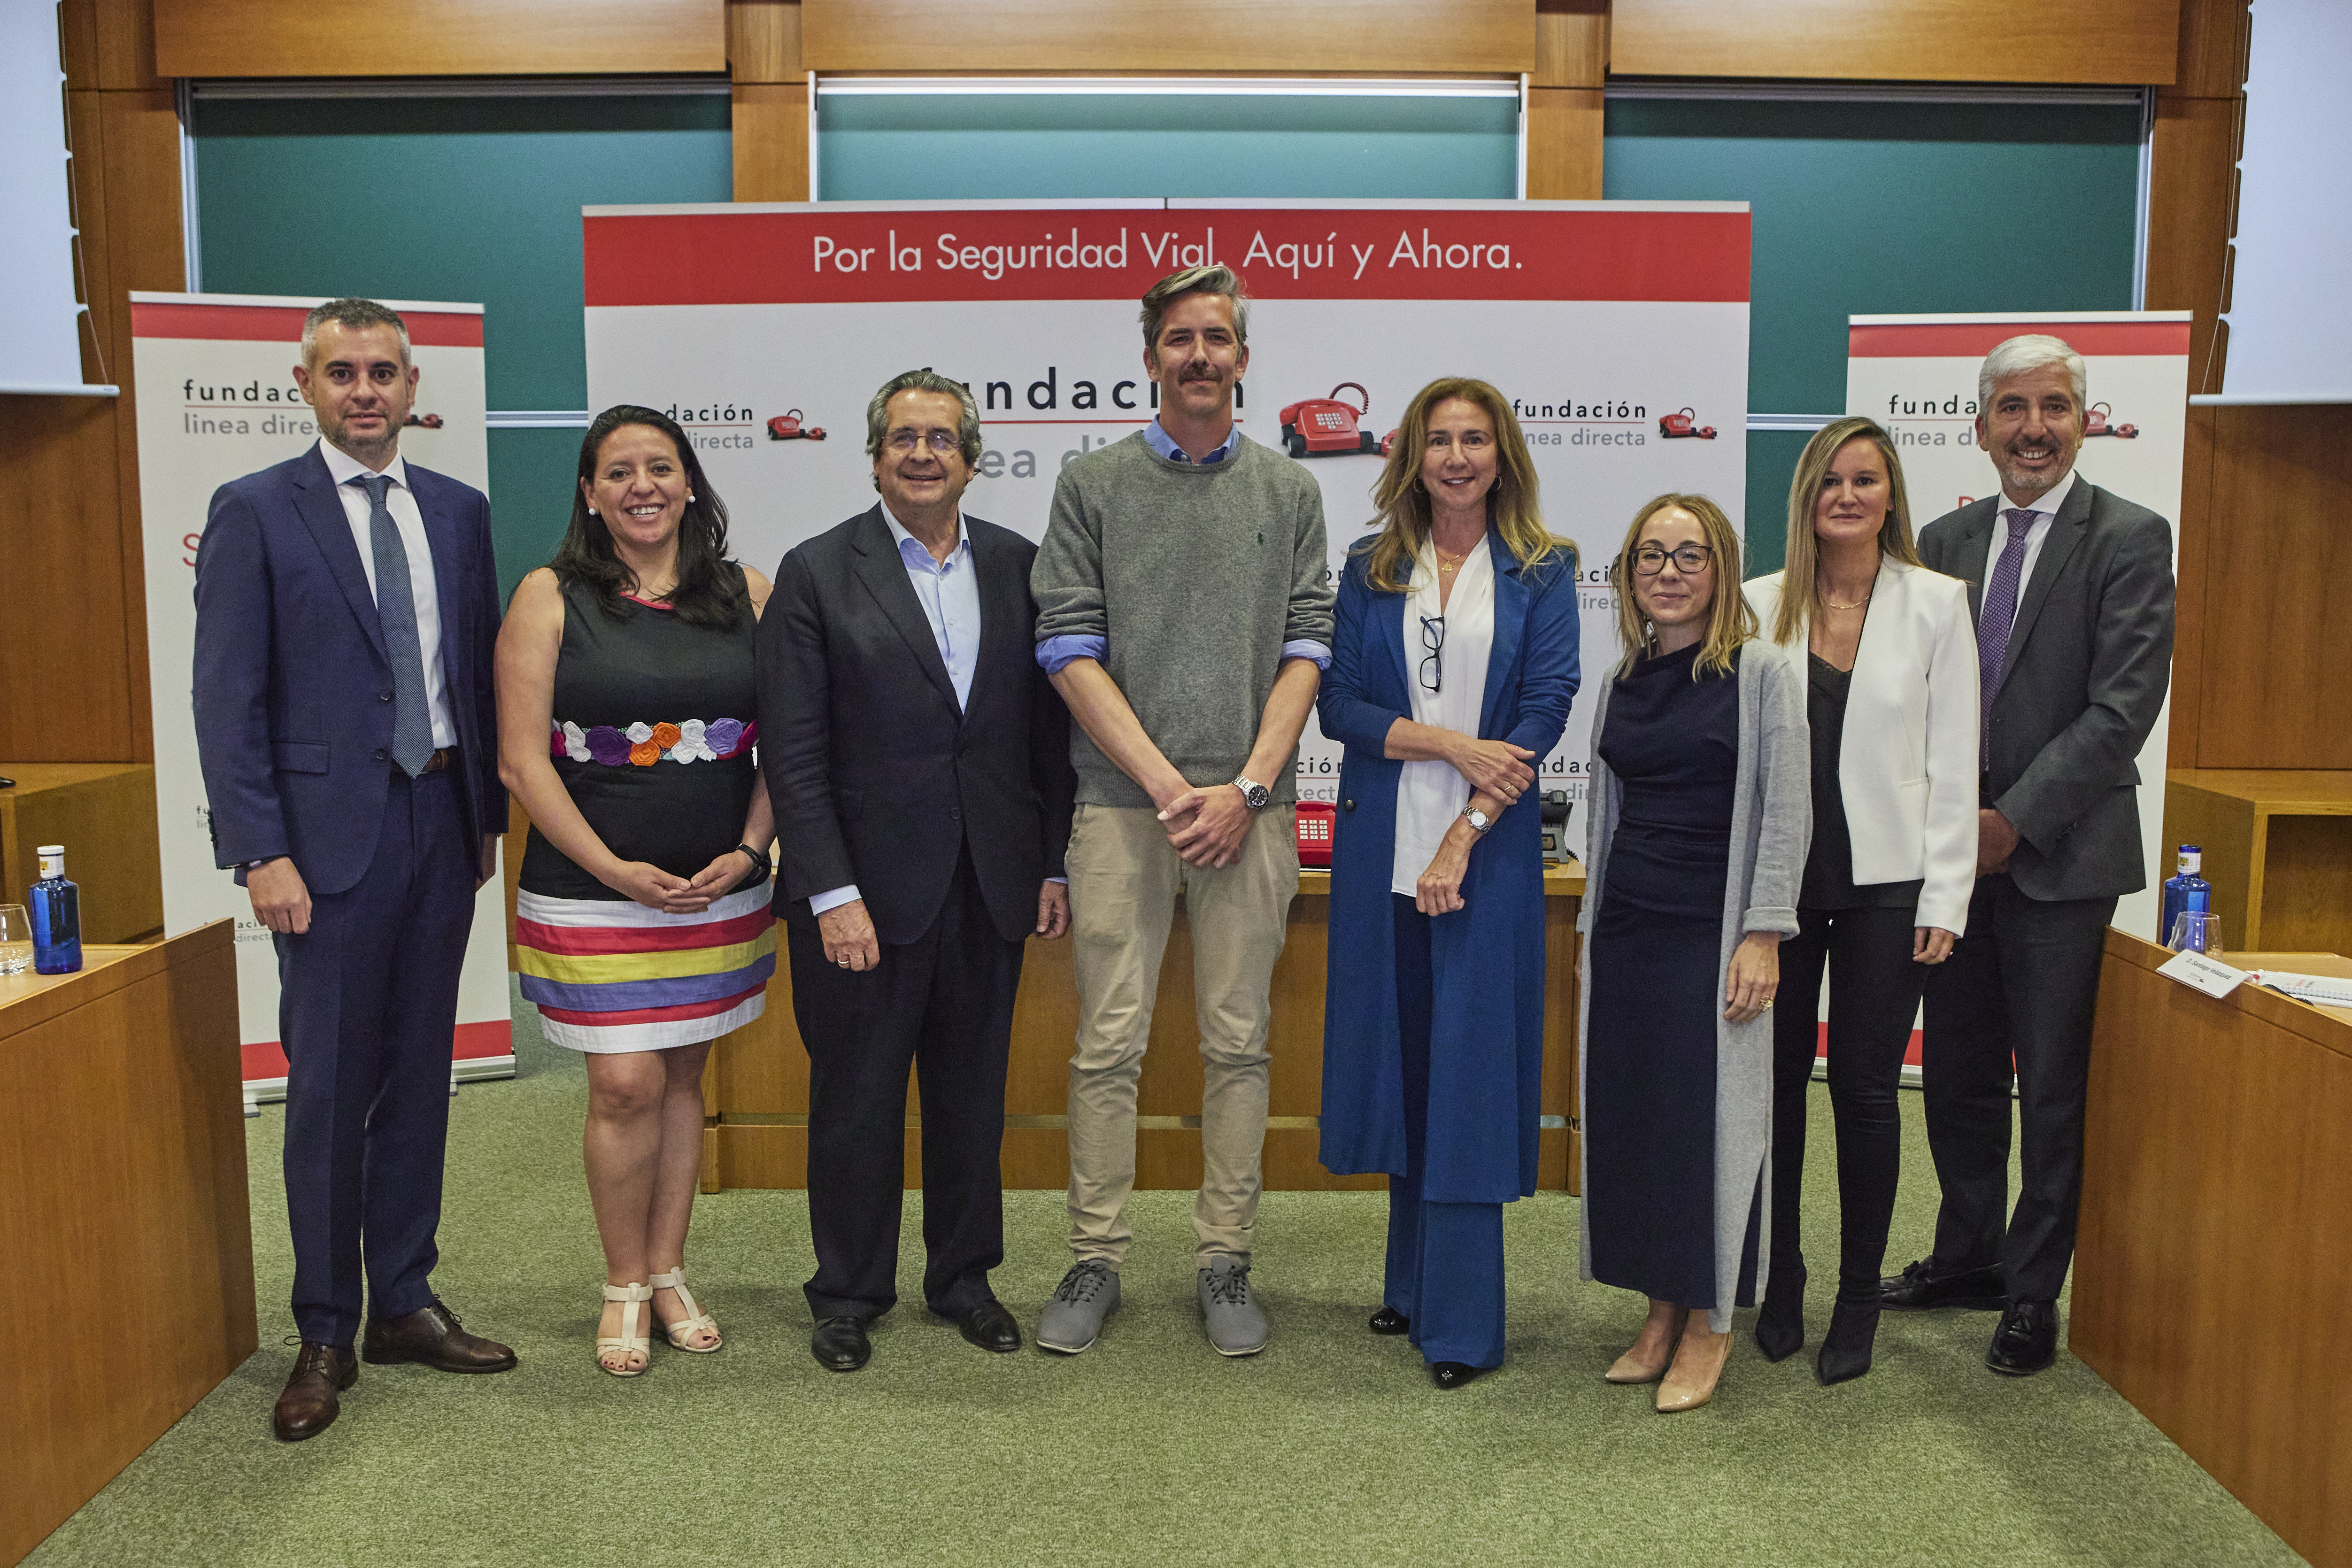 Engidi, winning startup at the 9th edition of Línea Directa Foundation's Road Safety Entrepreneurs Award